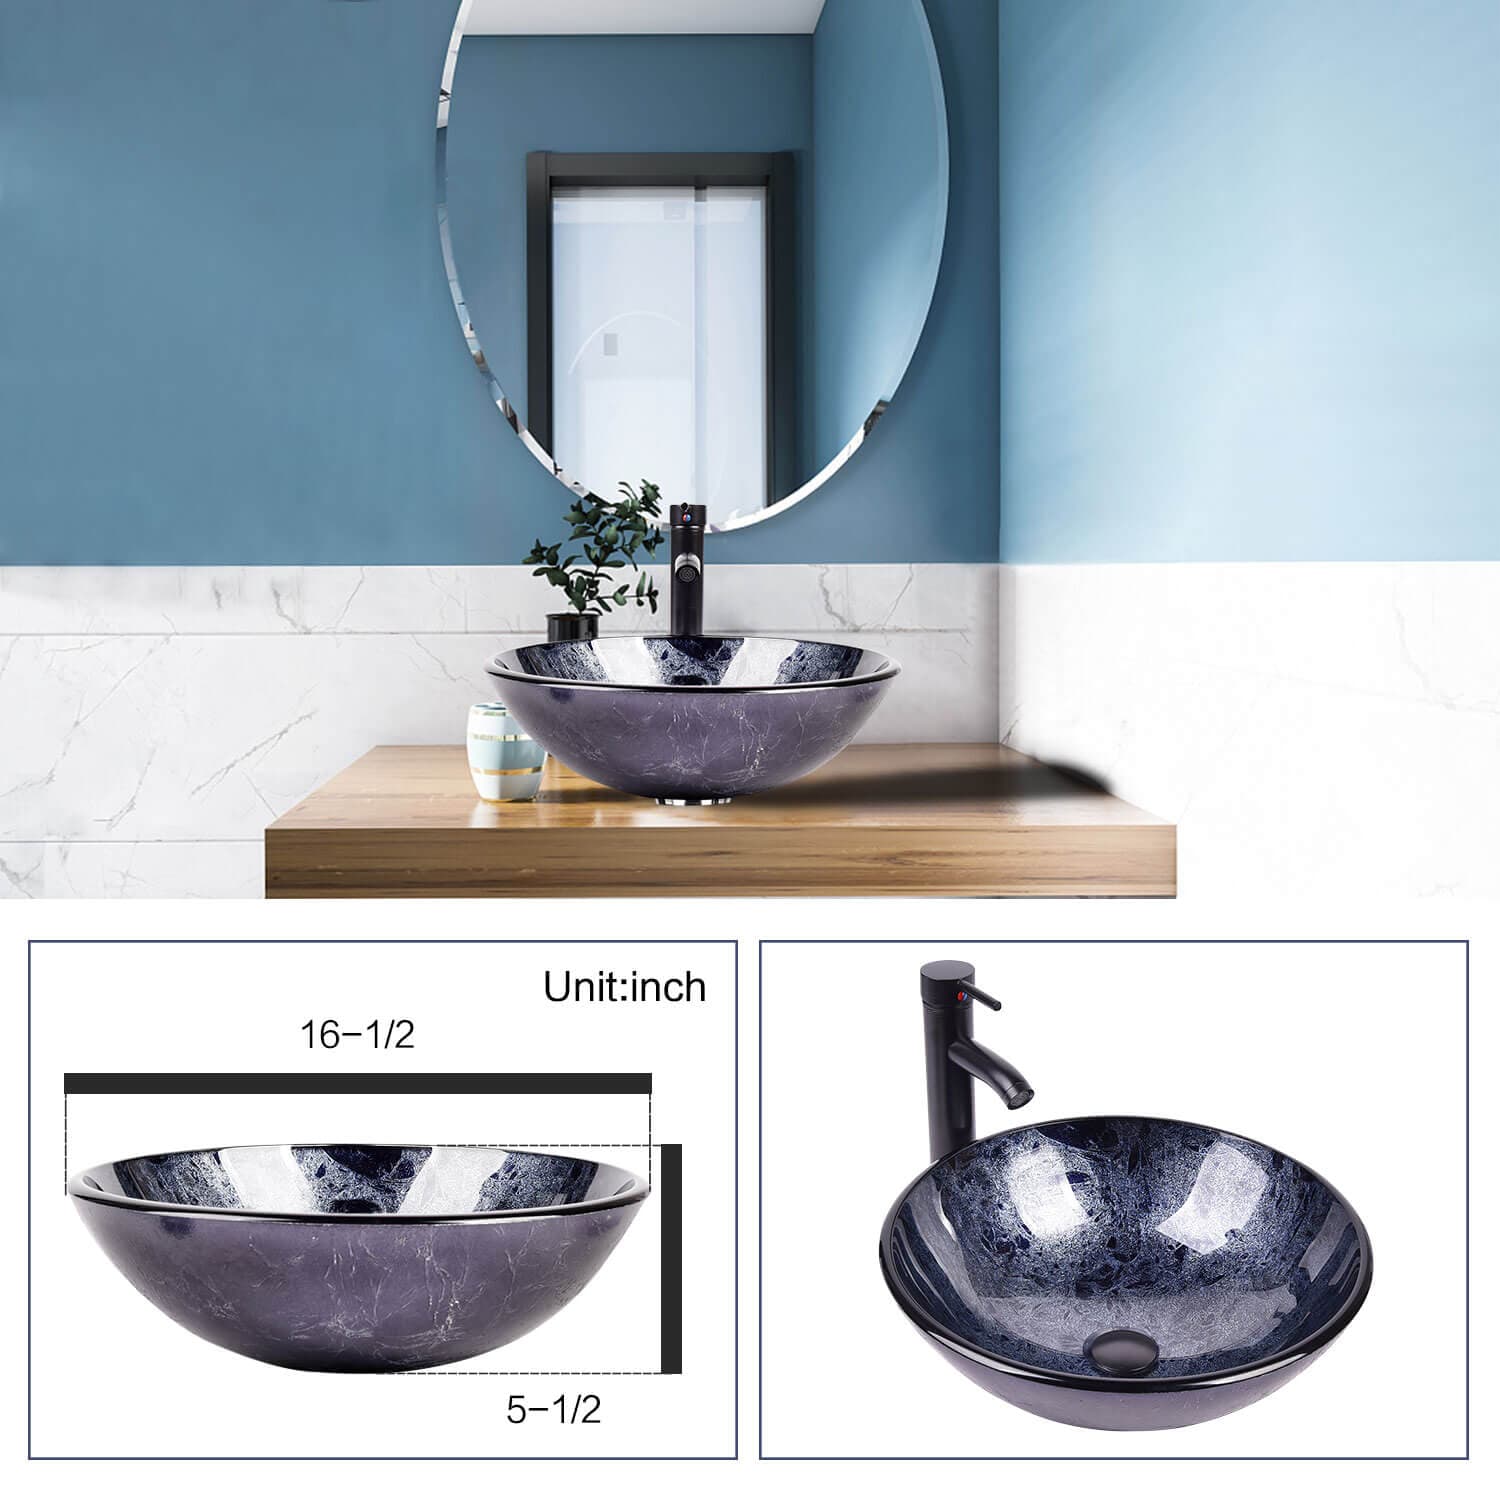 Elecwish Vessel Sinks Glass Bathroom Vessel Sink 16.5" BG1002 size and display scene